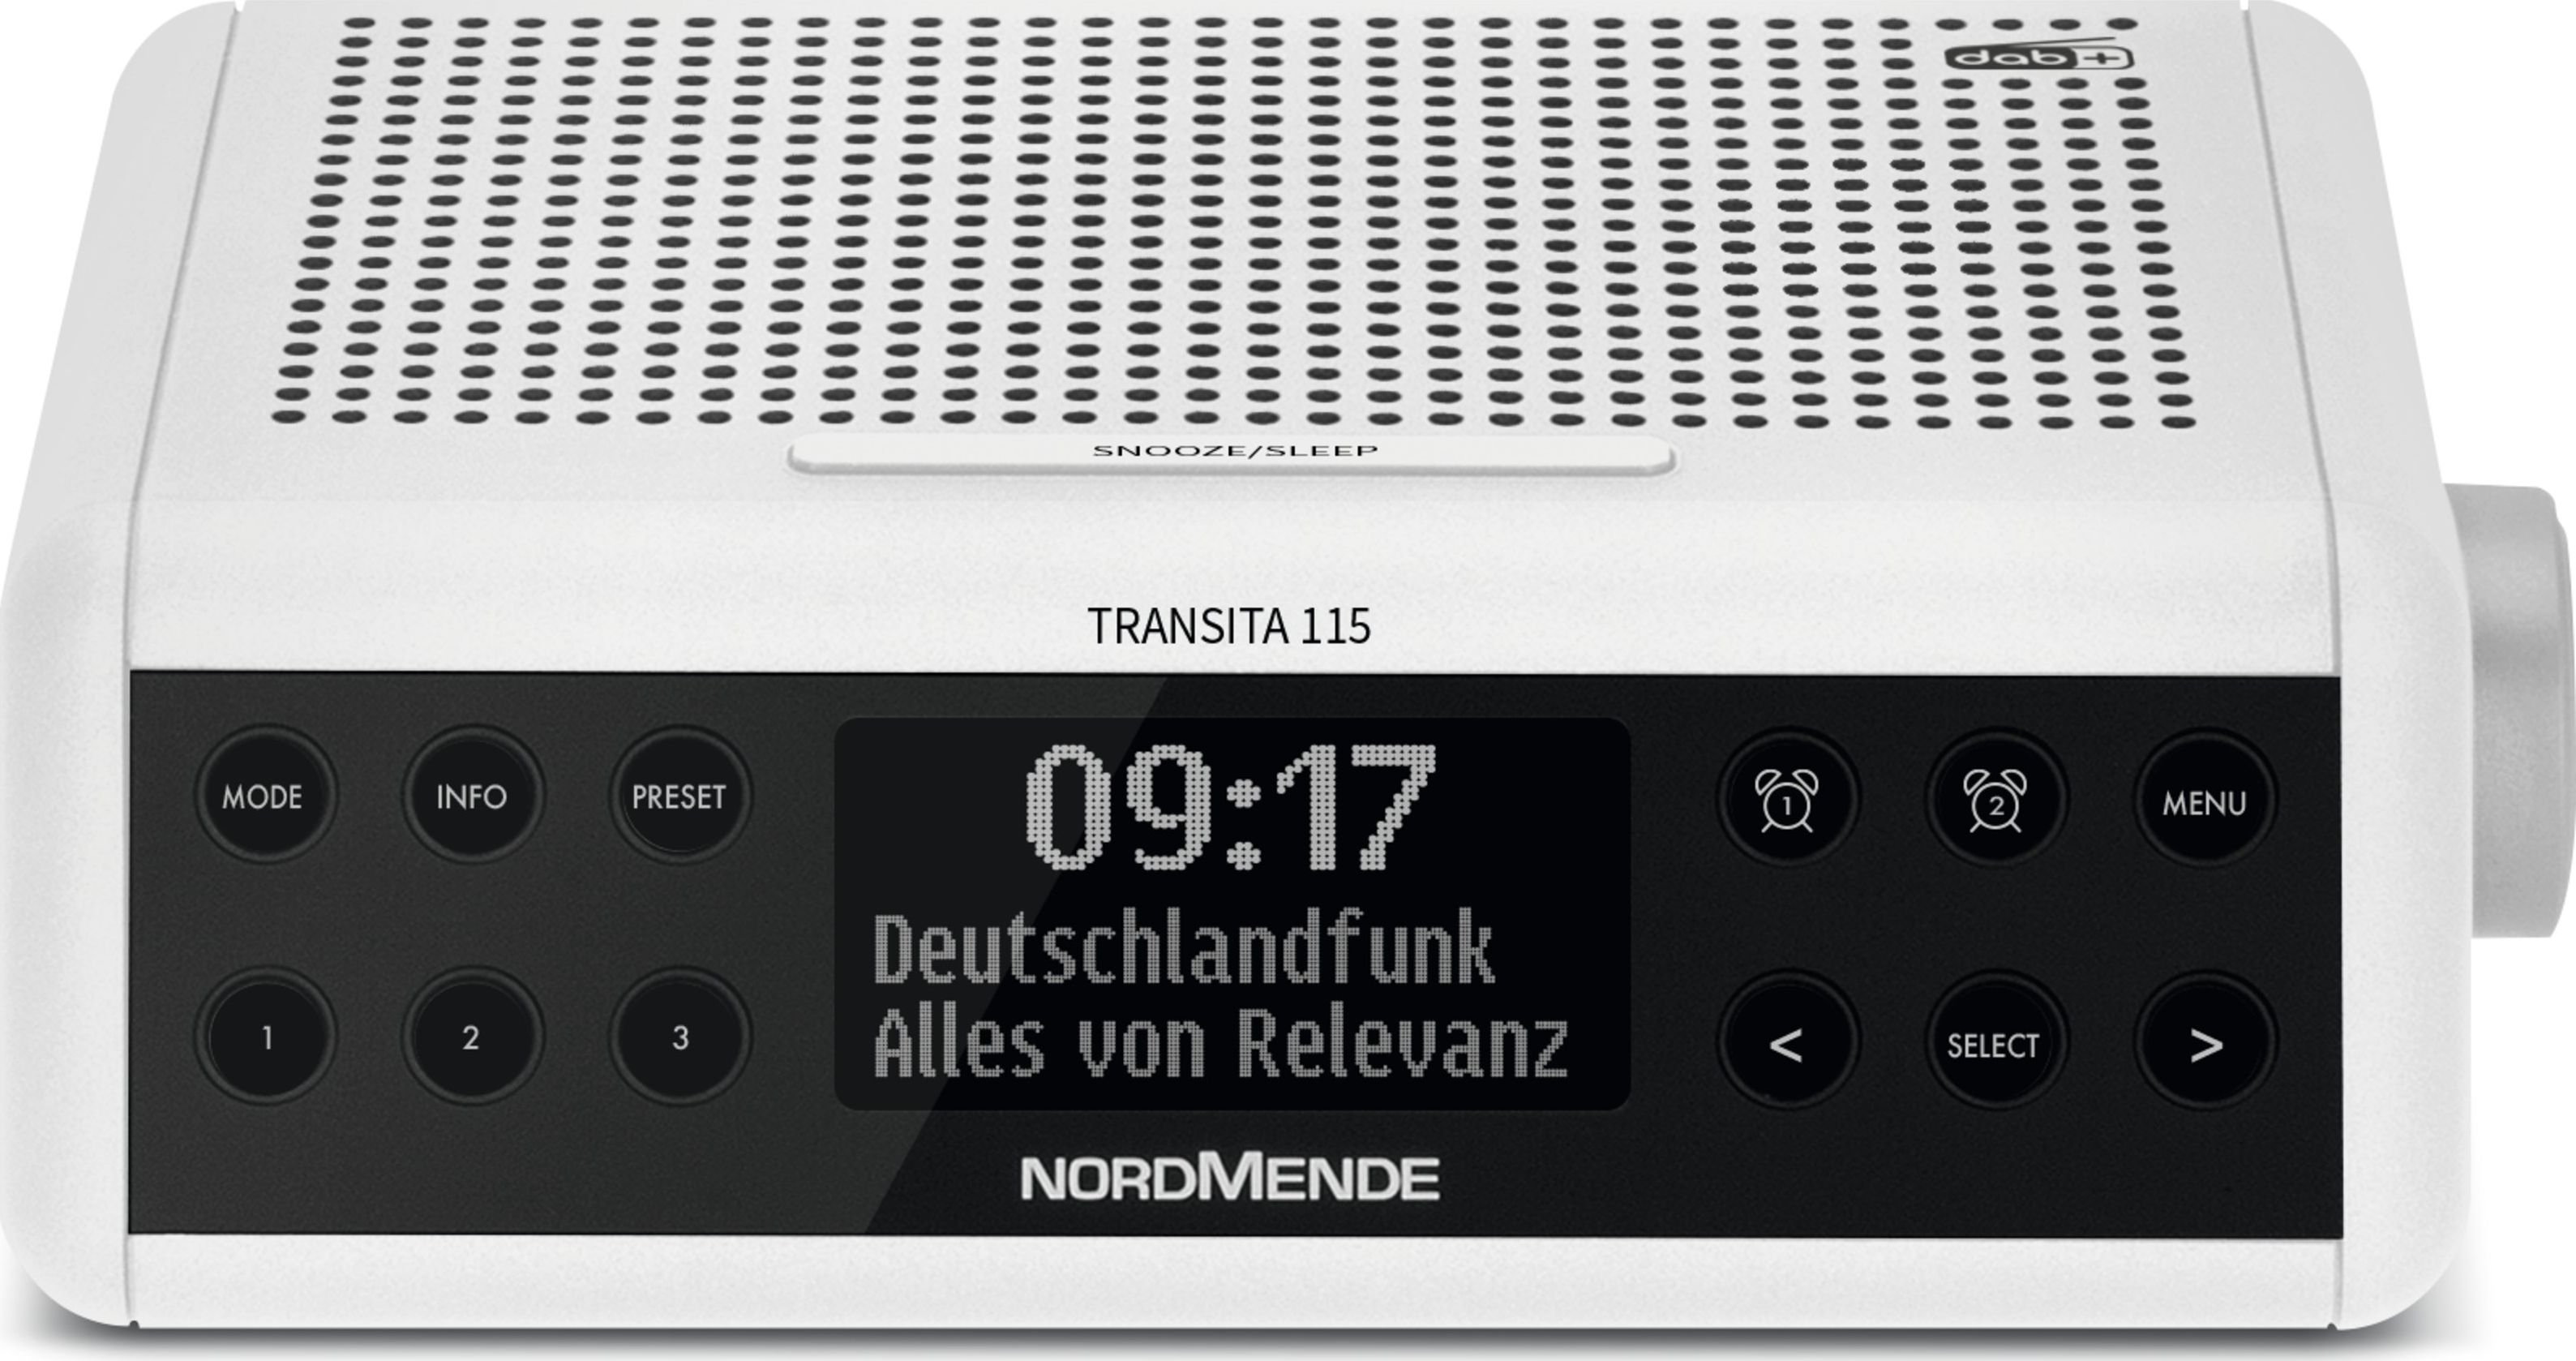 Radio cu ceas, Nordmende, TRANSITA 115, DAB + si FM, Display OLED, Functie snooze, 3 W, Alb